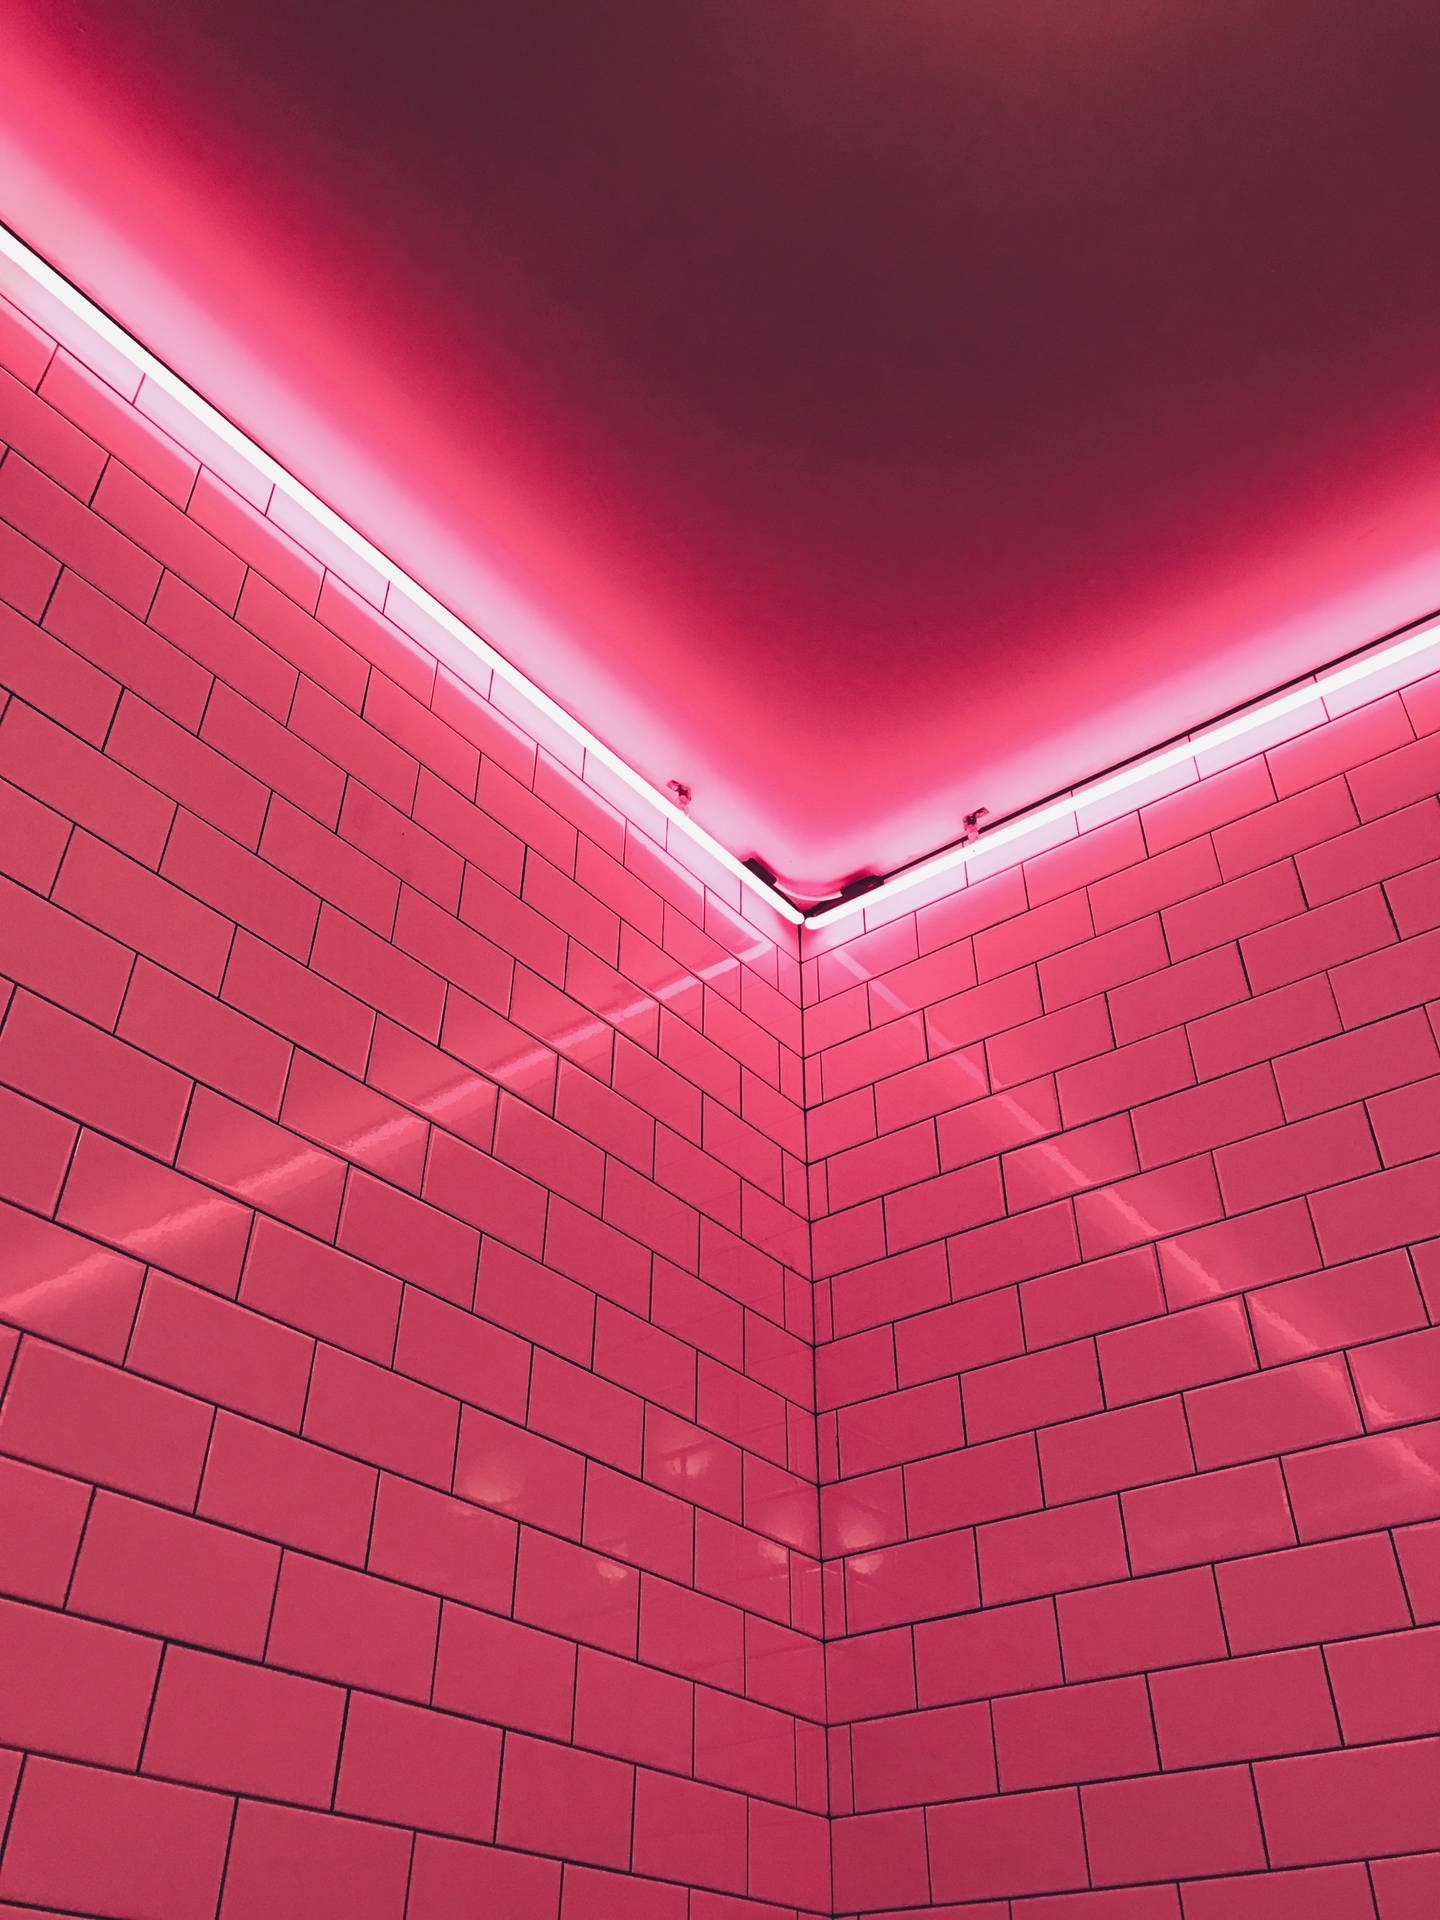 4k Neon Red Corner Wallpaper